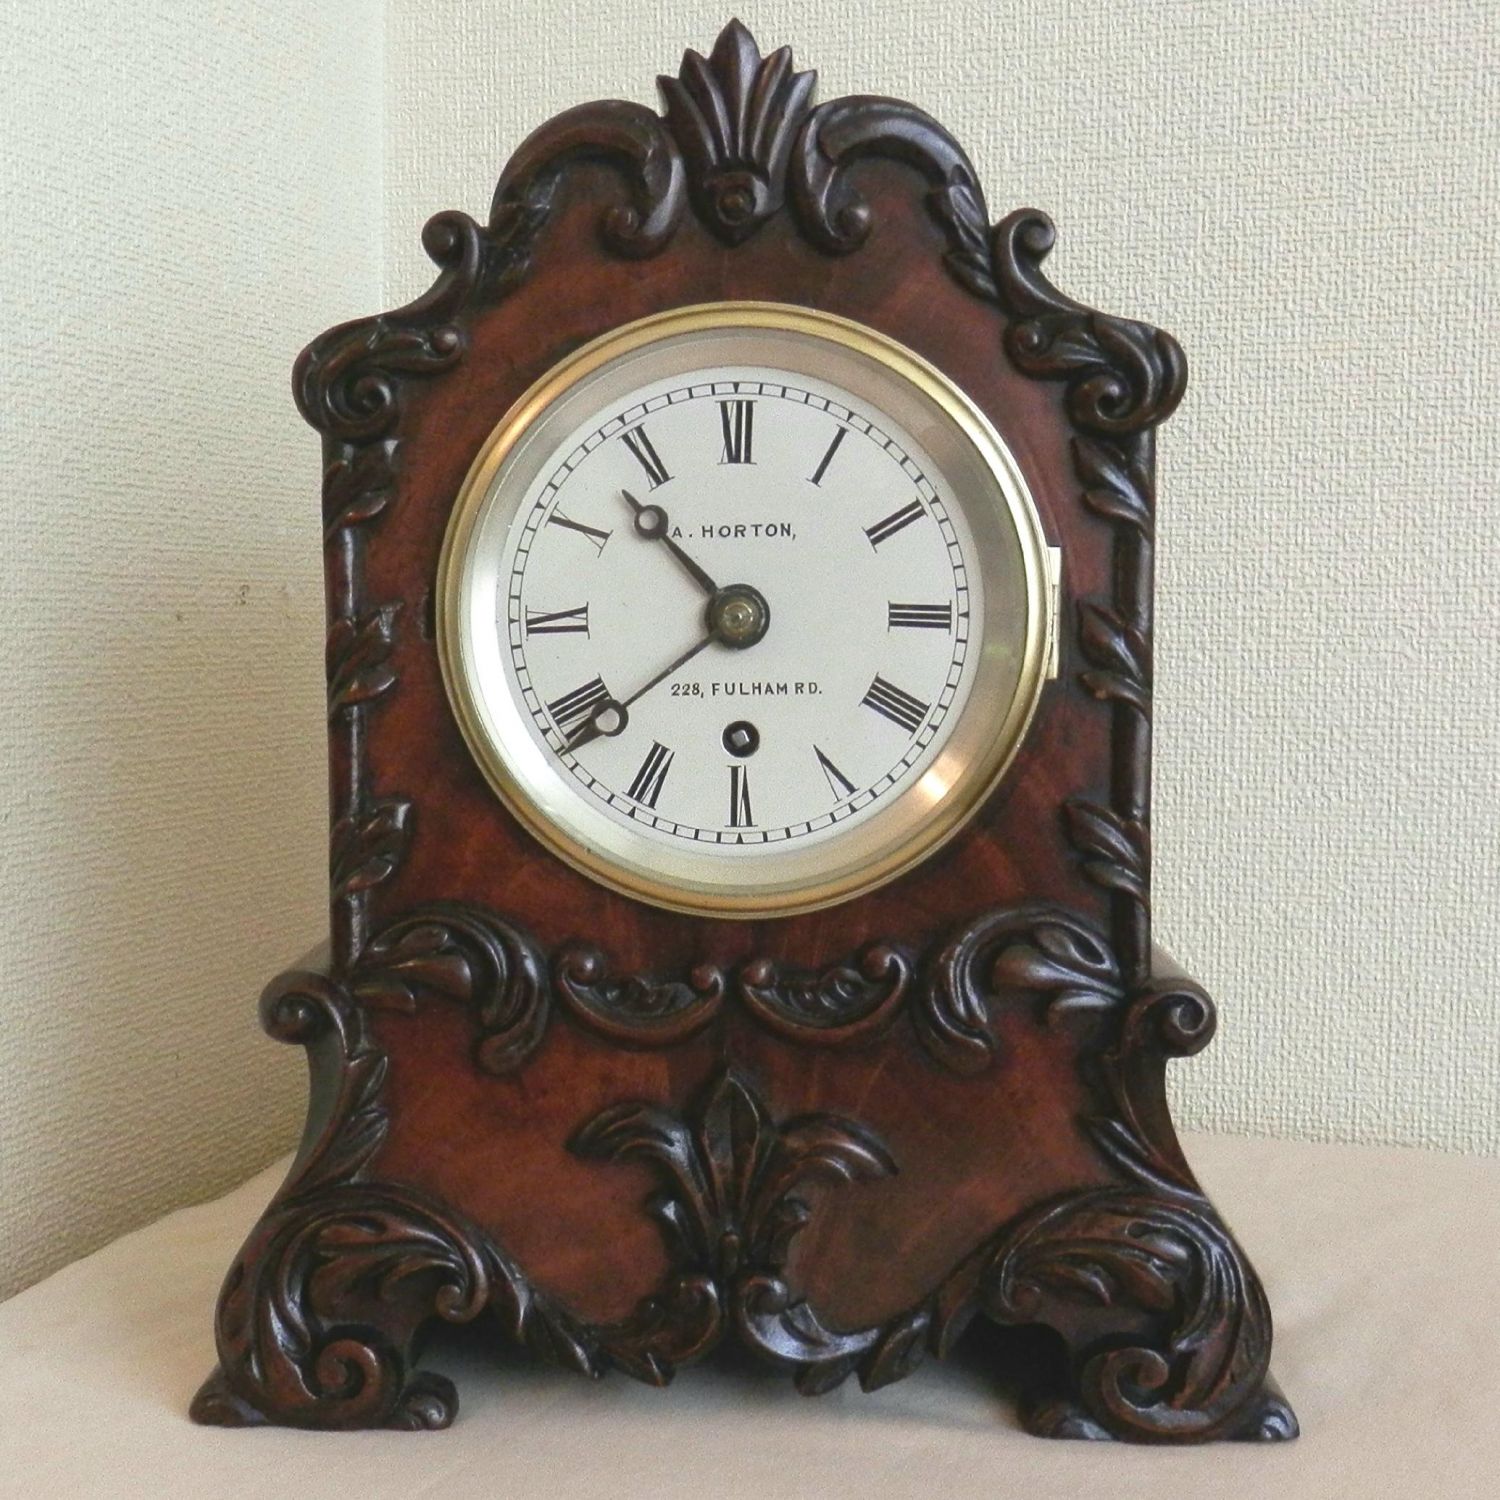 'Made in England' Bracket clock Antique clock hands from original design BC6 